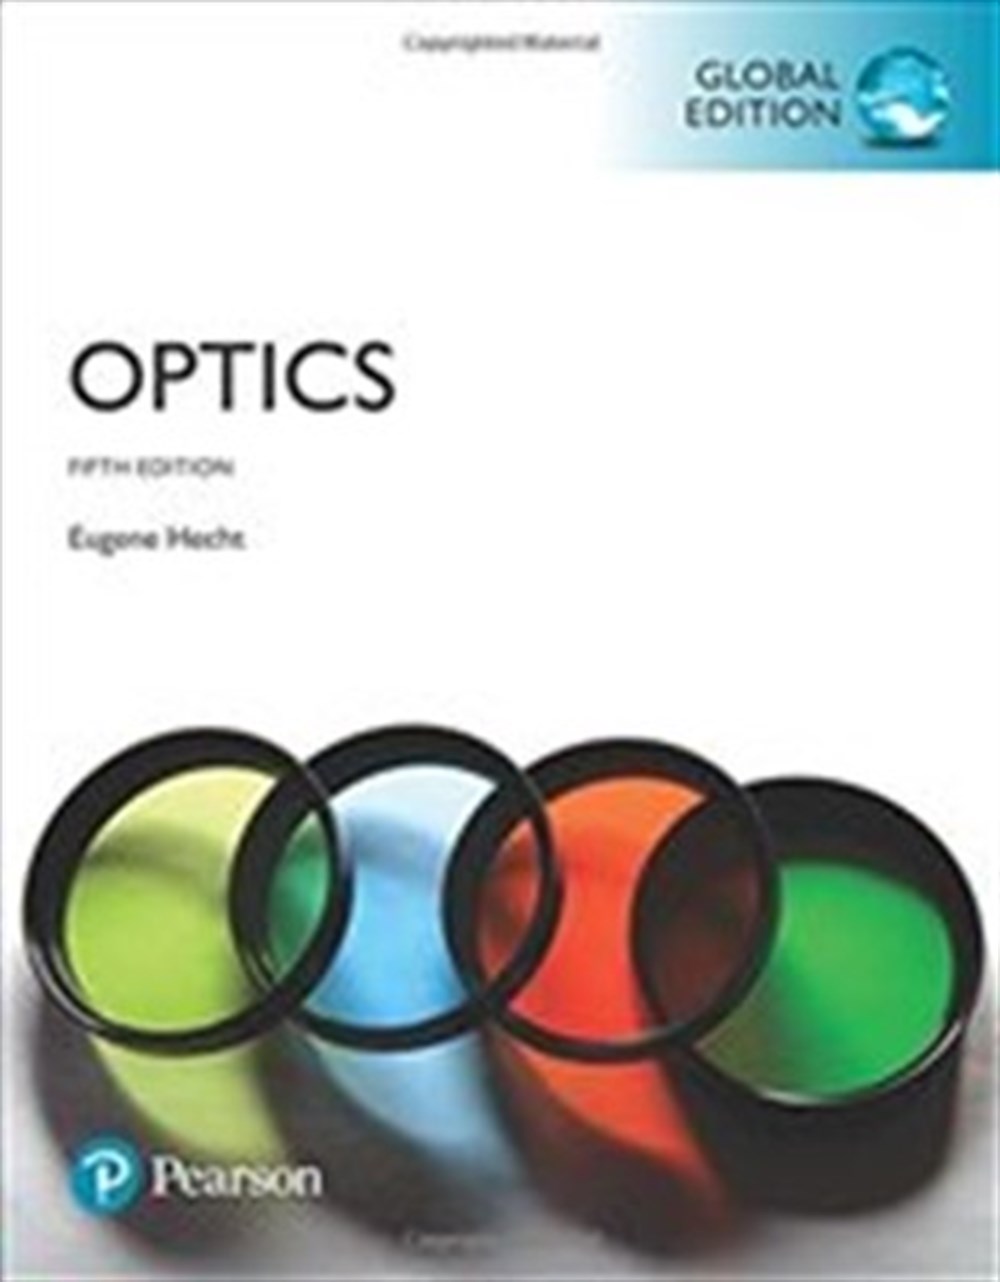 Optics